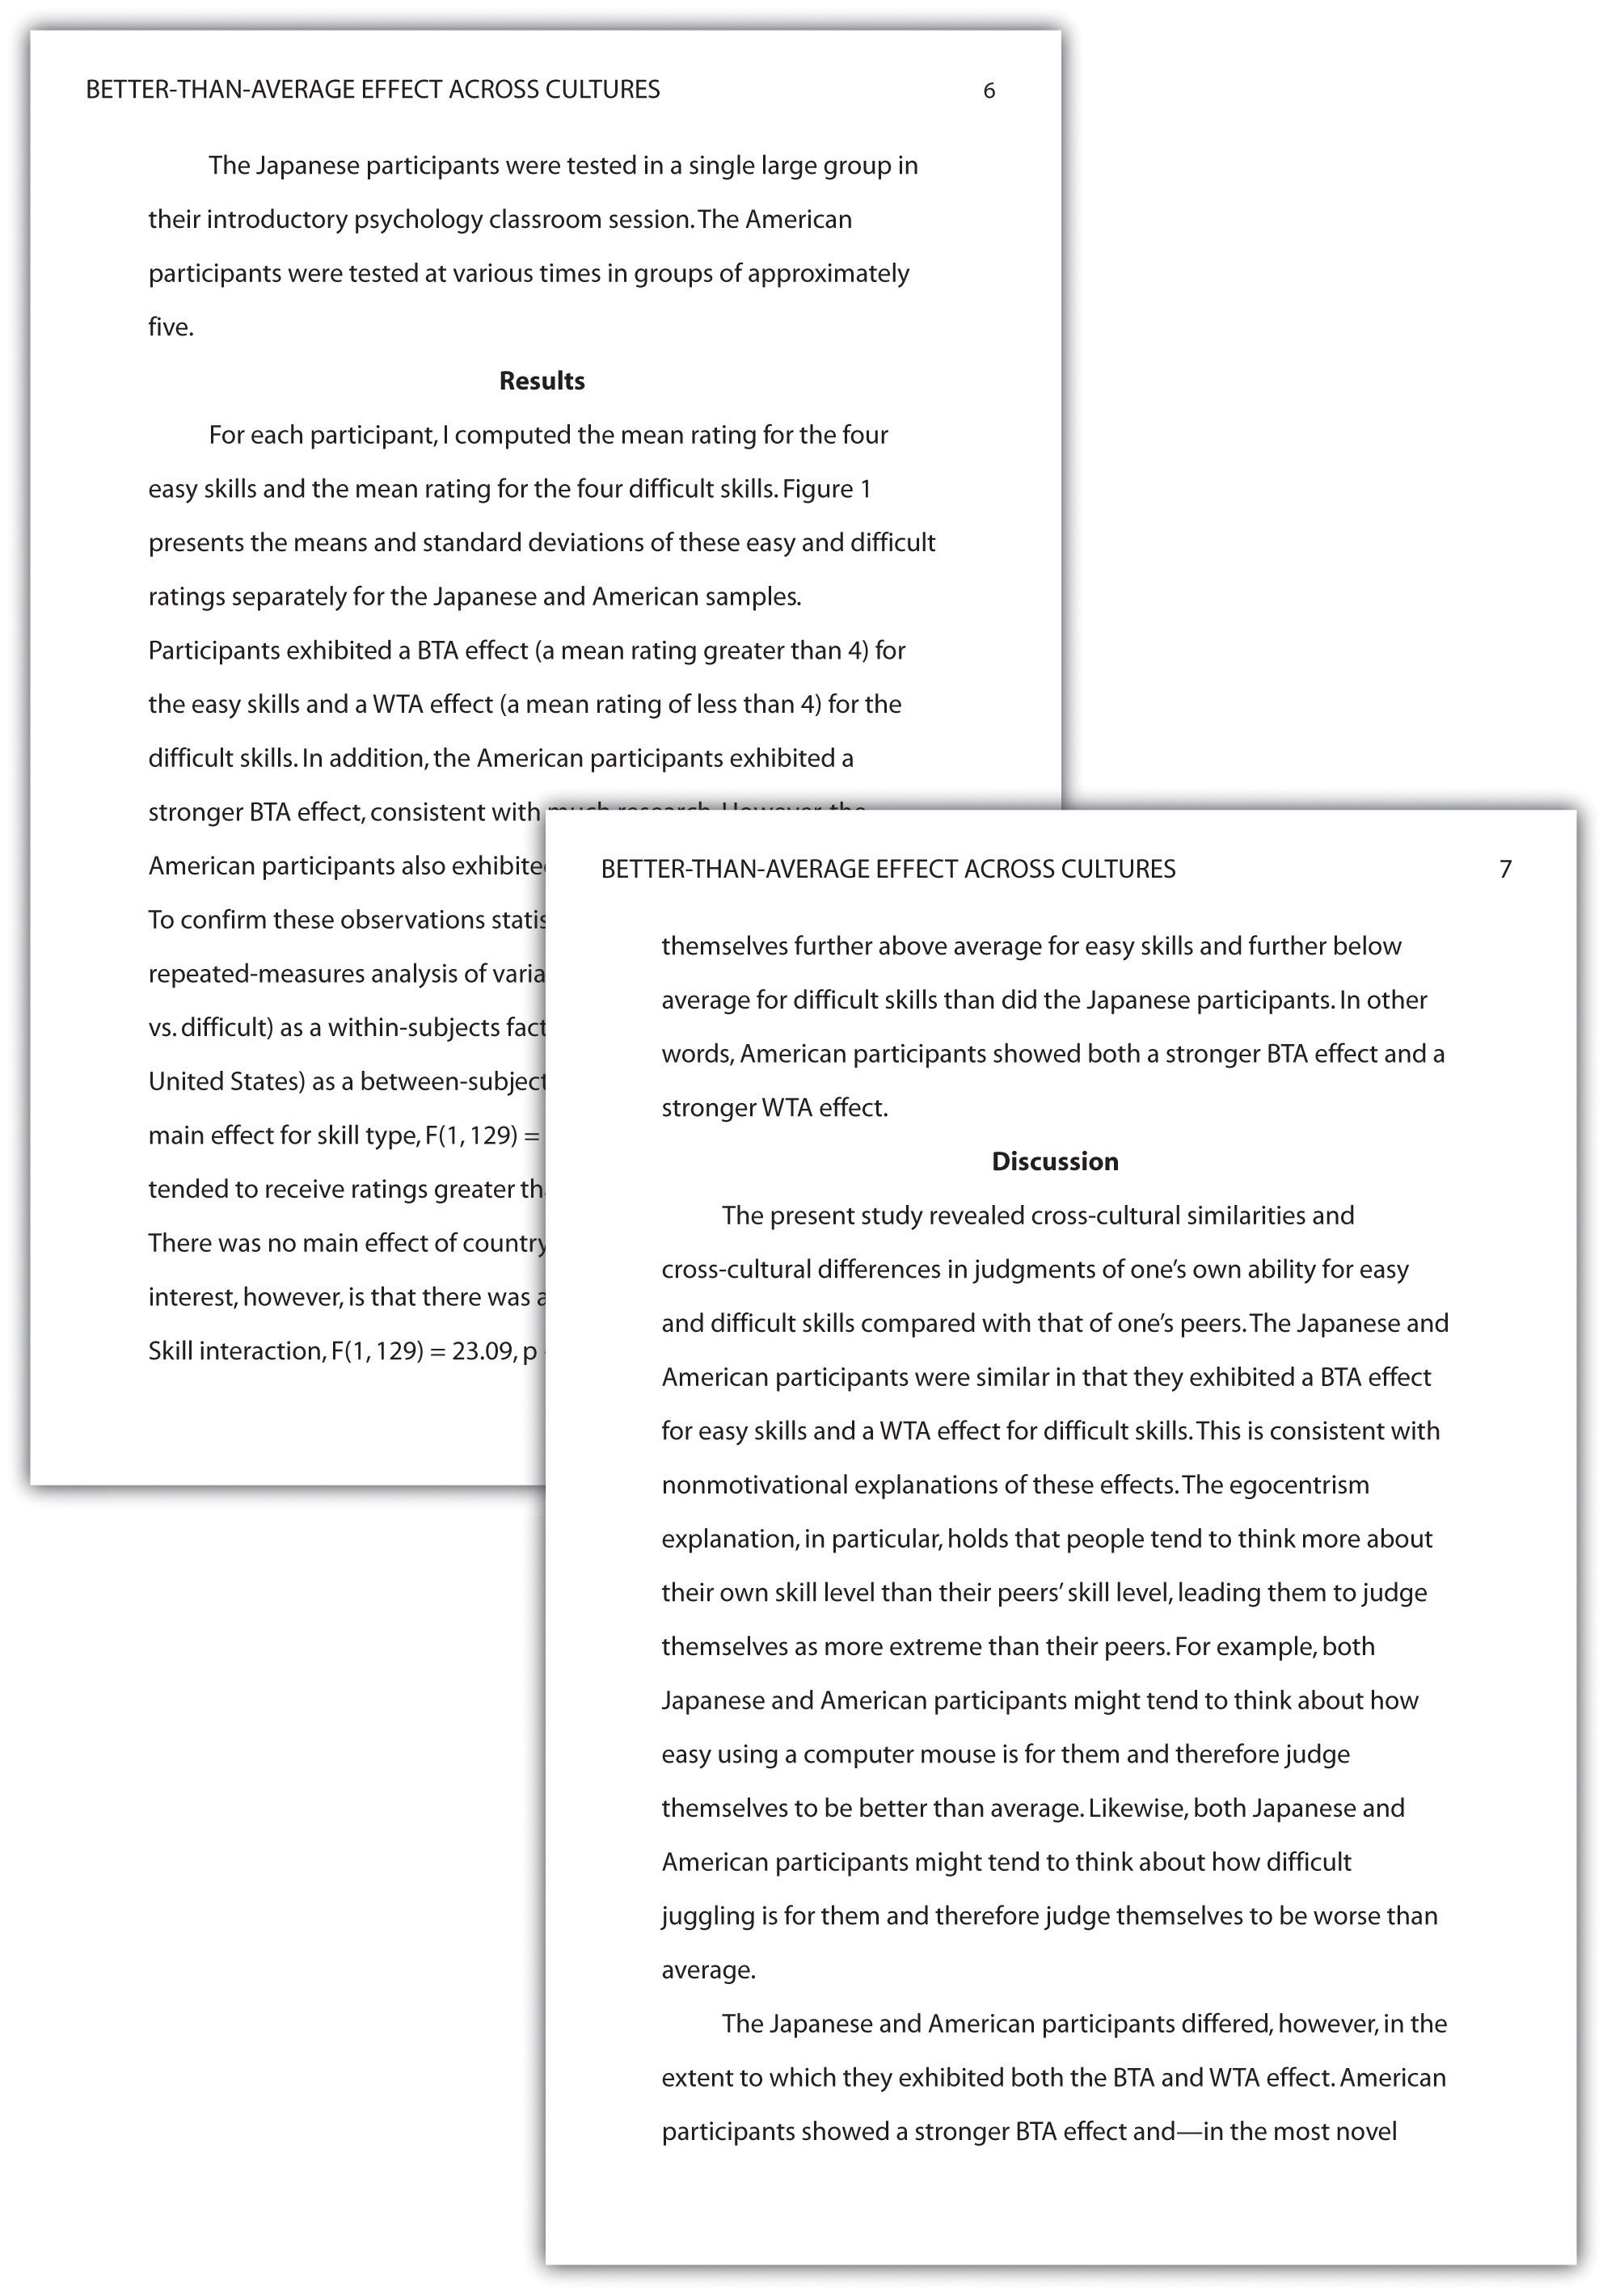 how to make a pdf look like a book